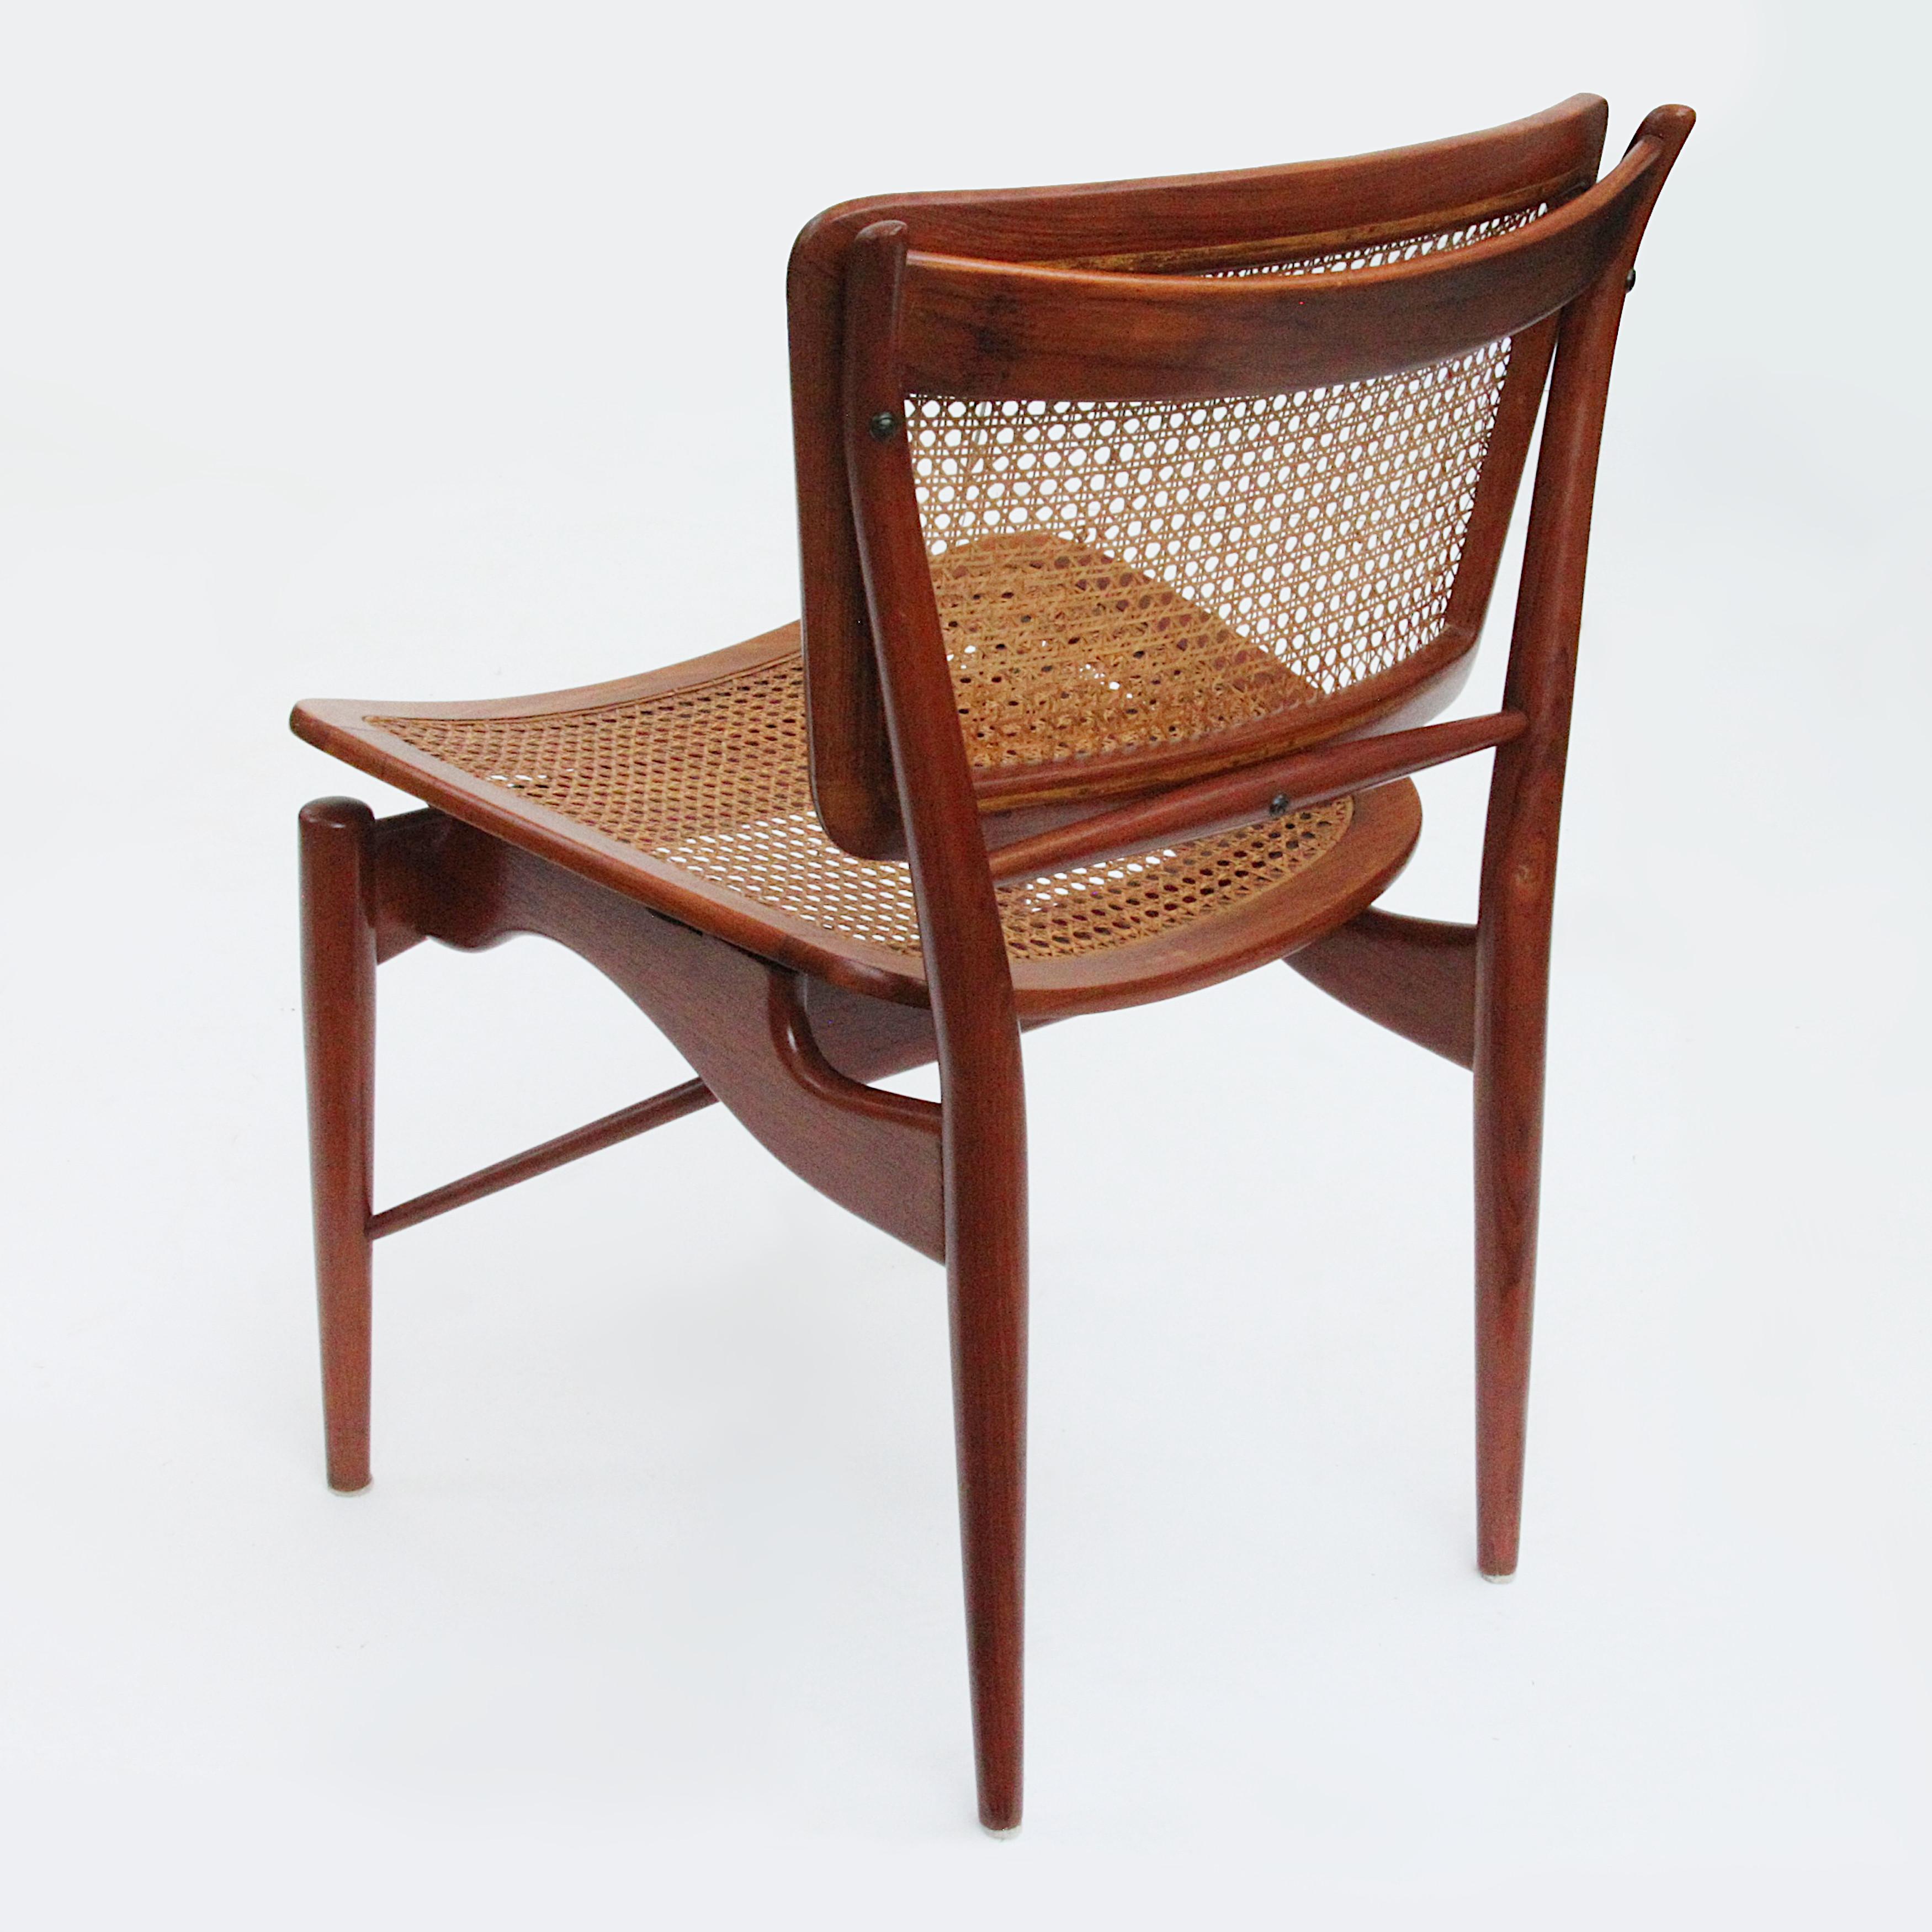 Set of 4 Original Finn Juhl Model NV 51/403 Teak & Cane Dining Chairs by Baker 1